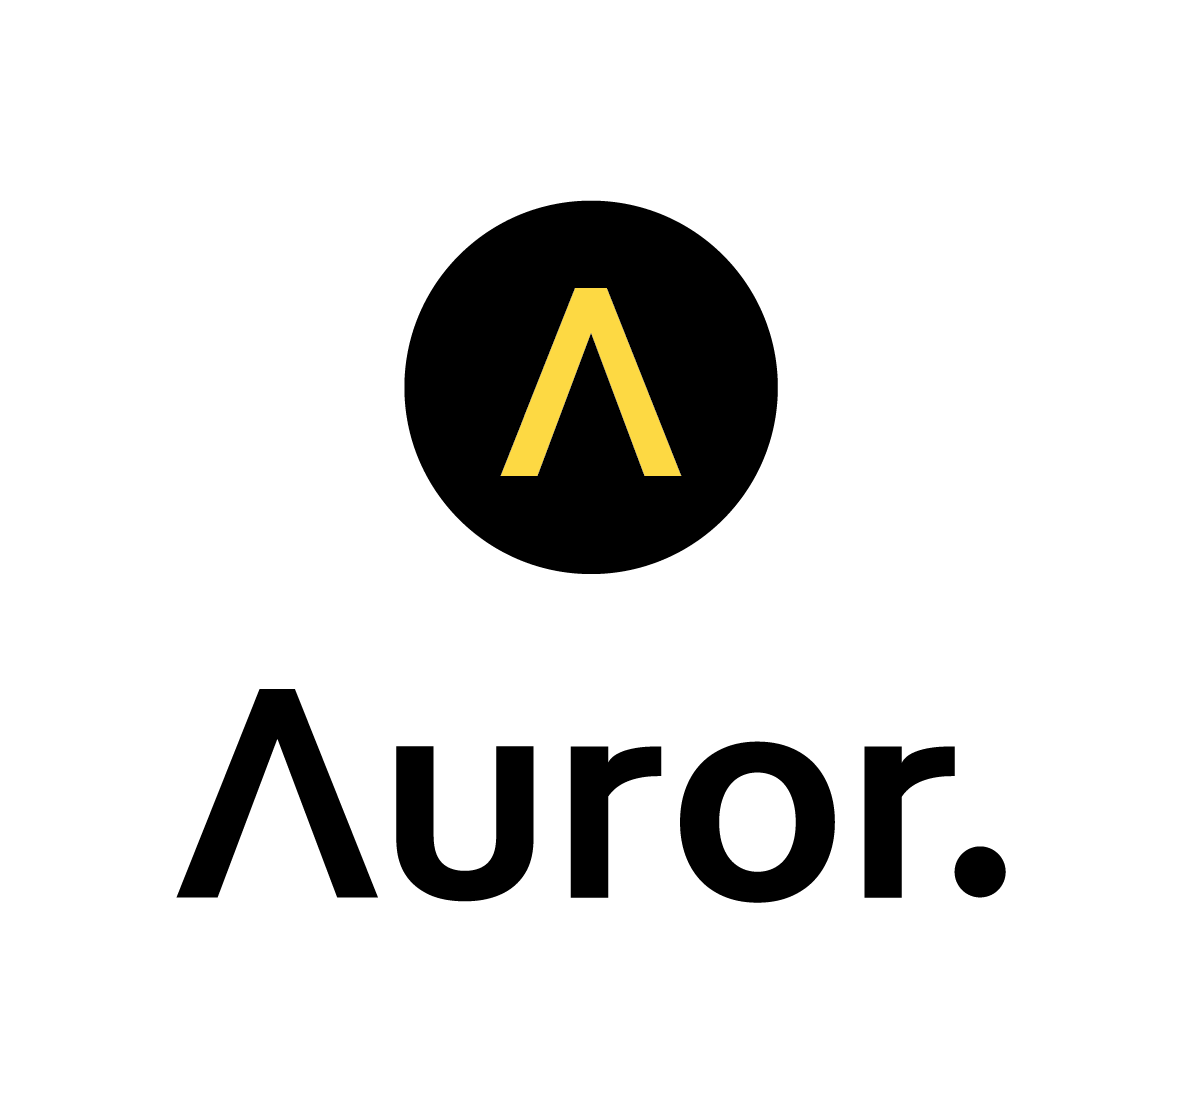 Auror